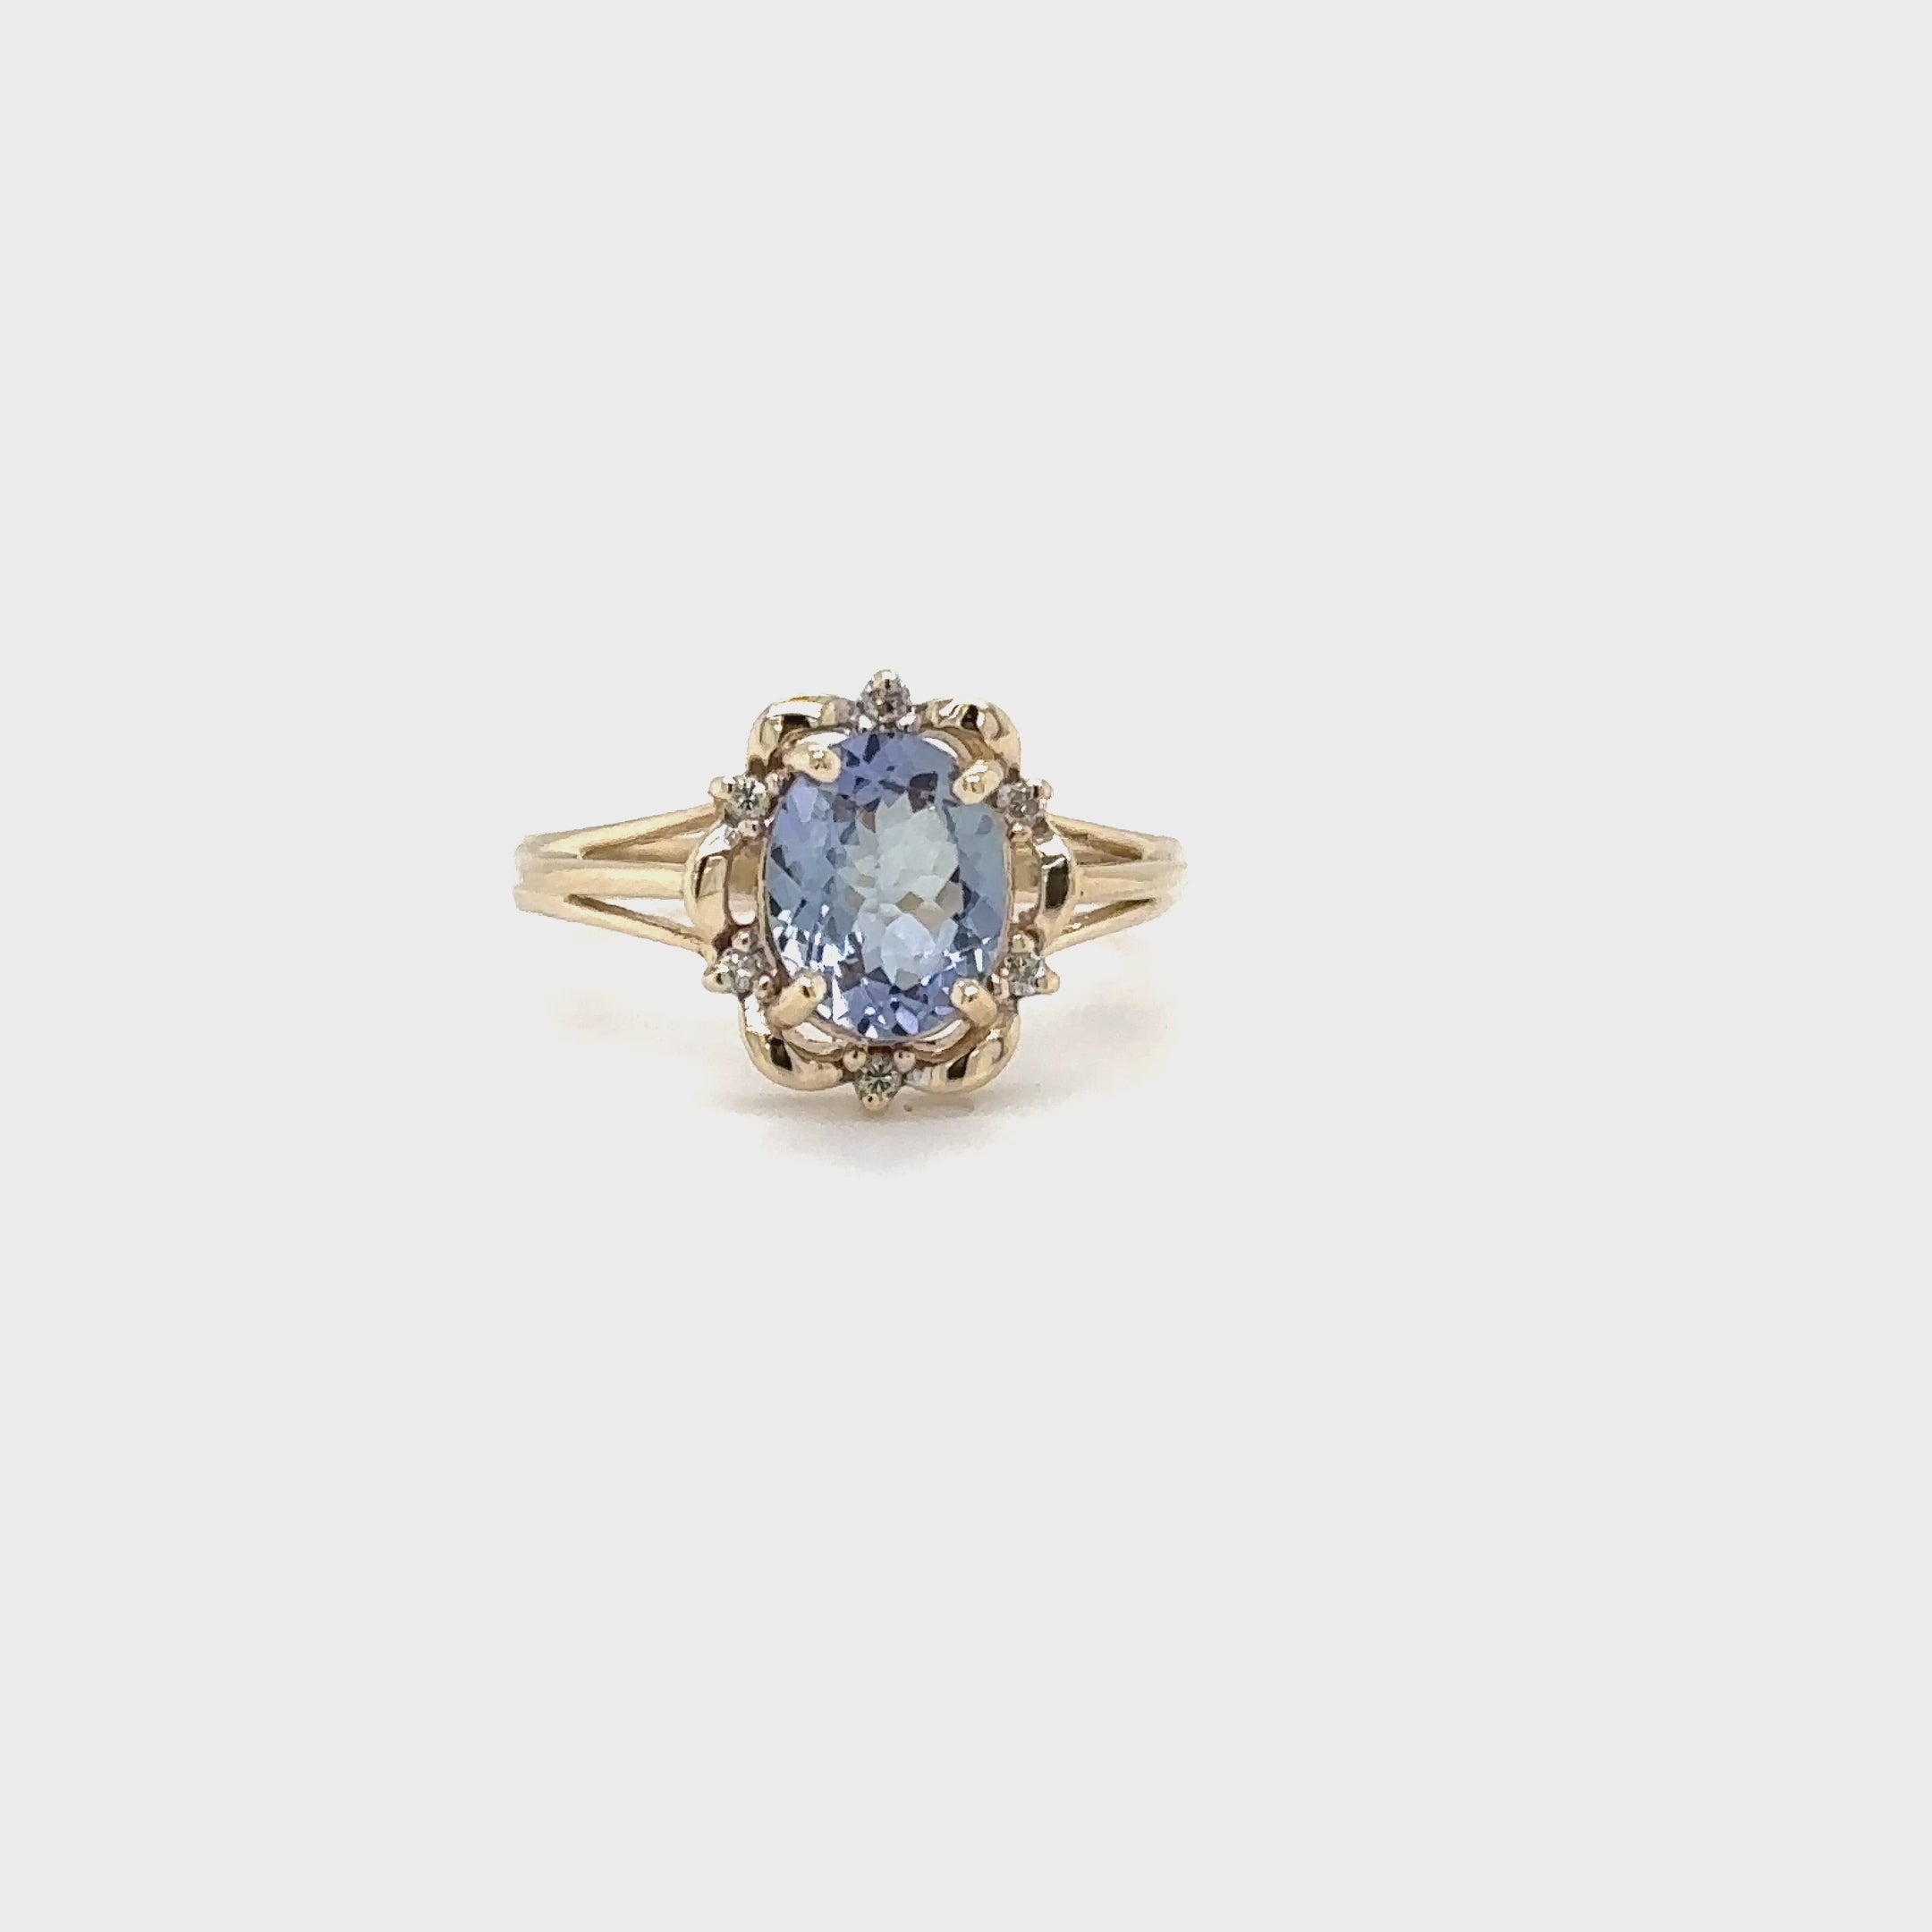 Natural Tanzanite & Diamond Ring 14K Solid Gold 1.62tcw Vintage Ring Gemstone Birthstone Purple Blue Peacock Jewellery Fine Jewelry Ladies